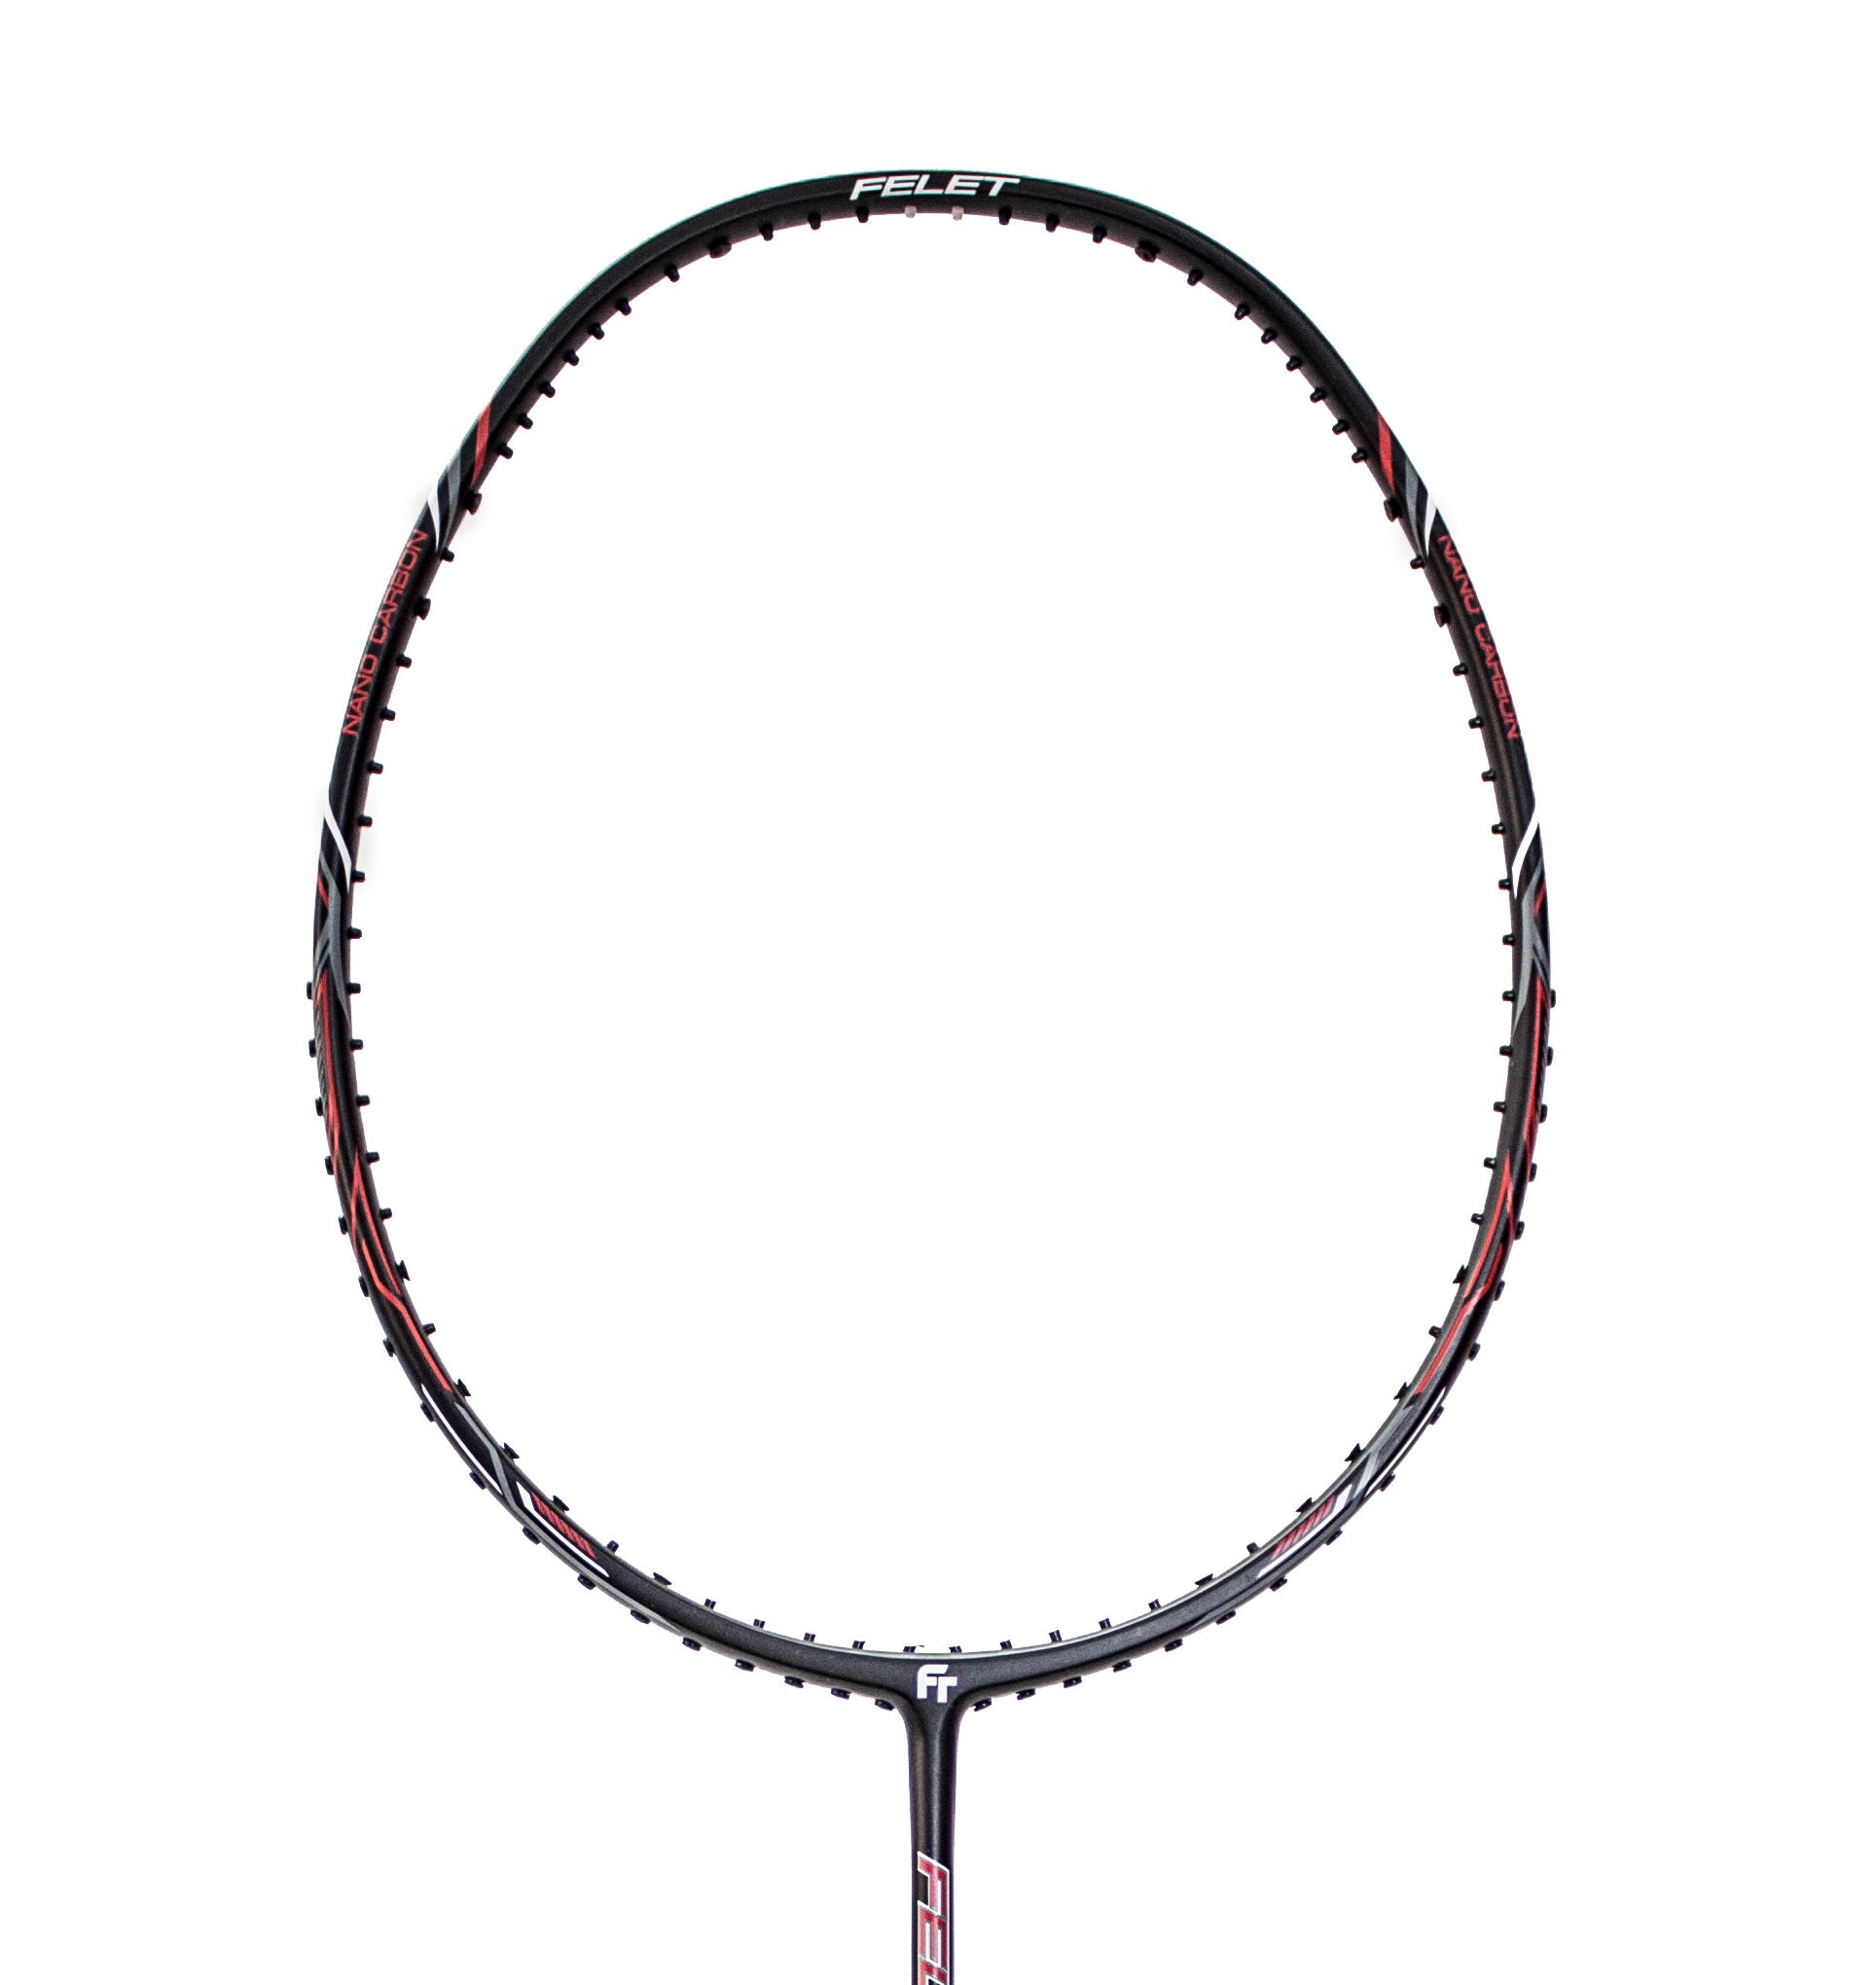 Felet Tornado 88 Badminton Racket